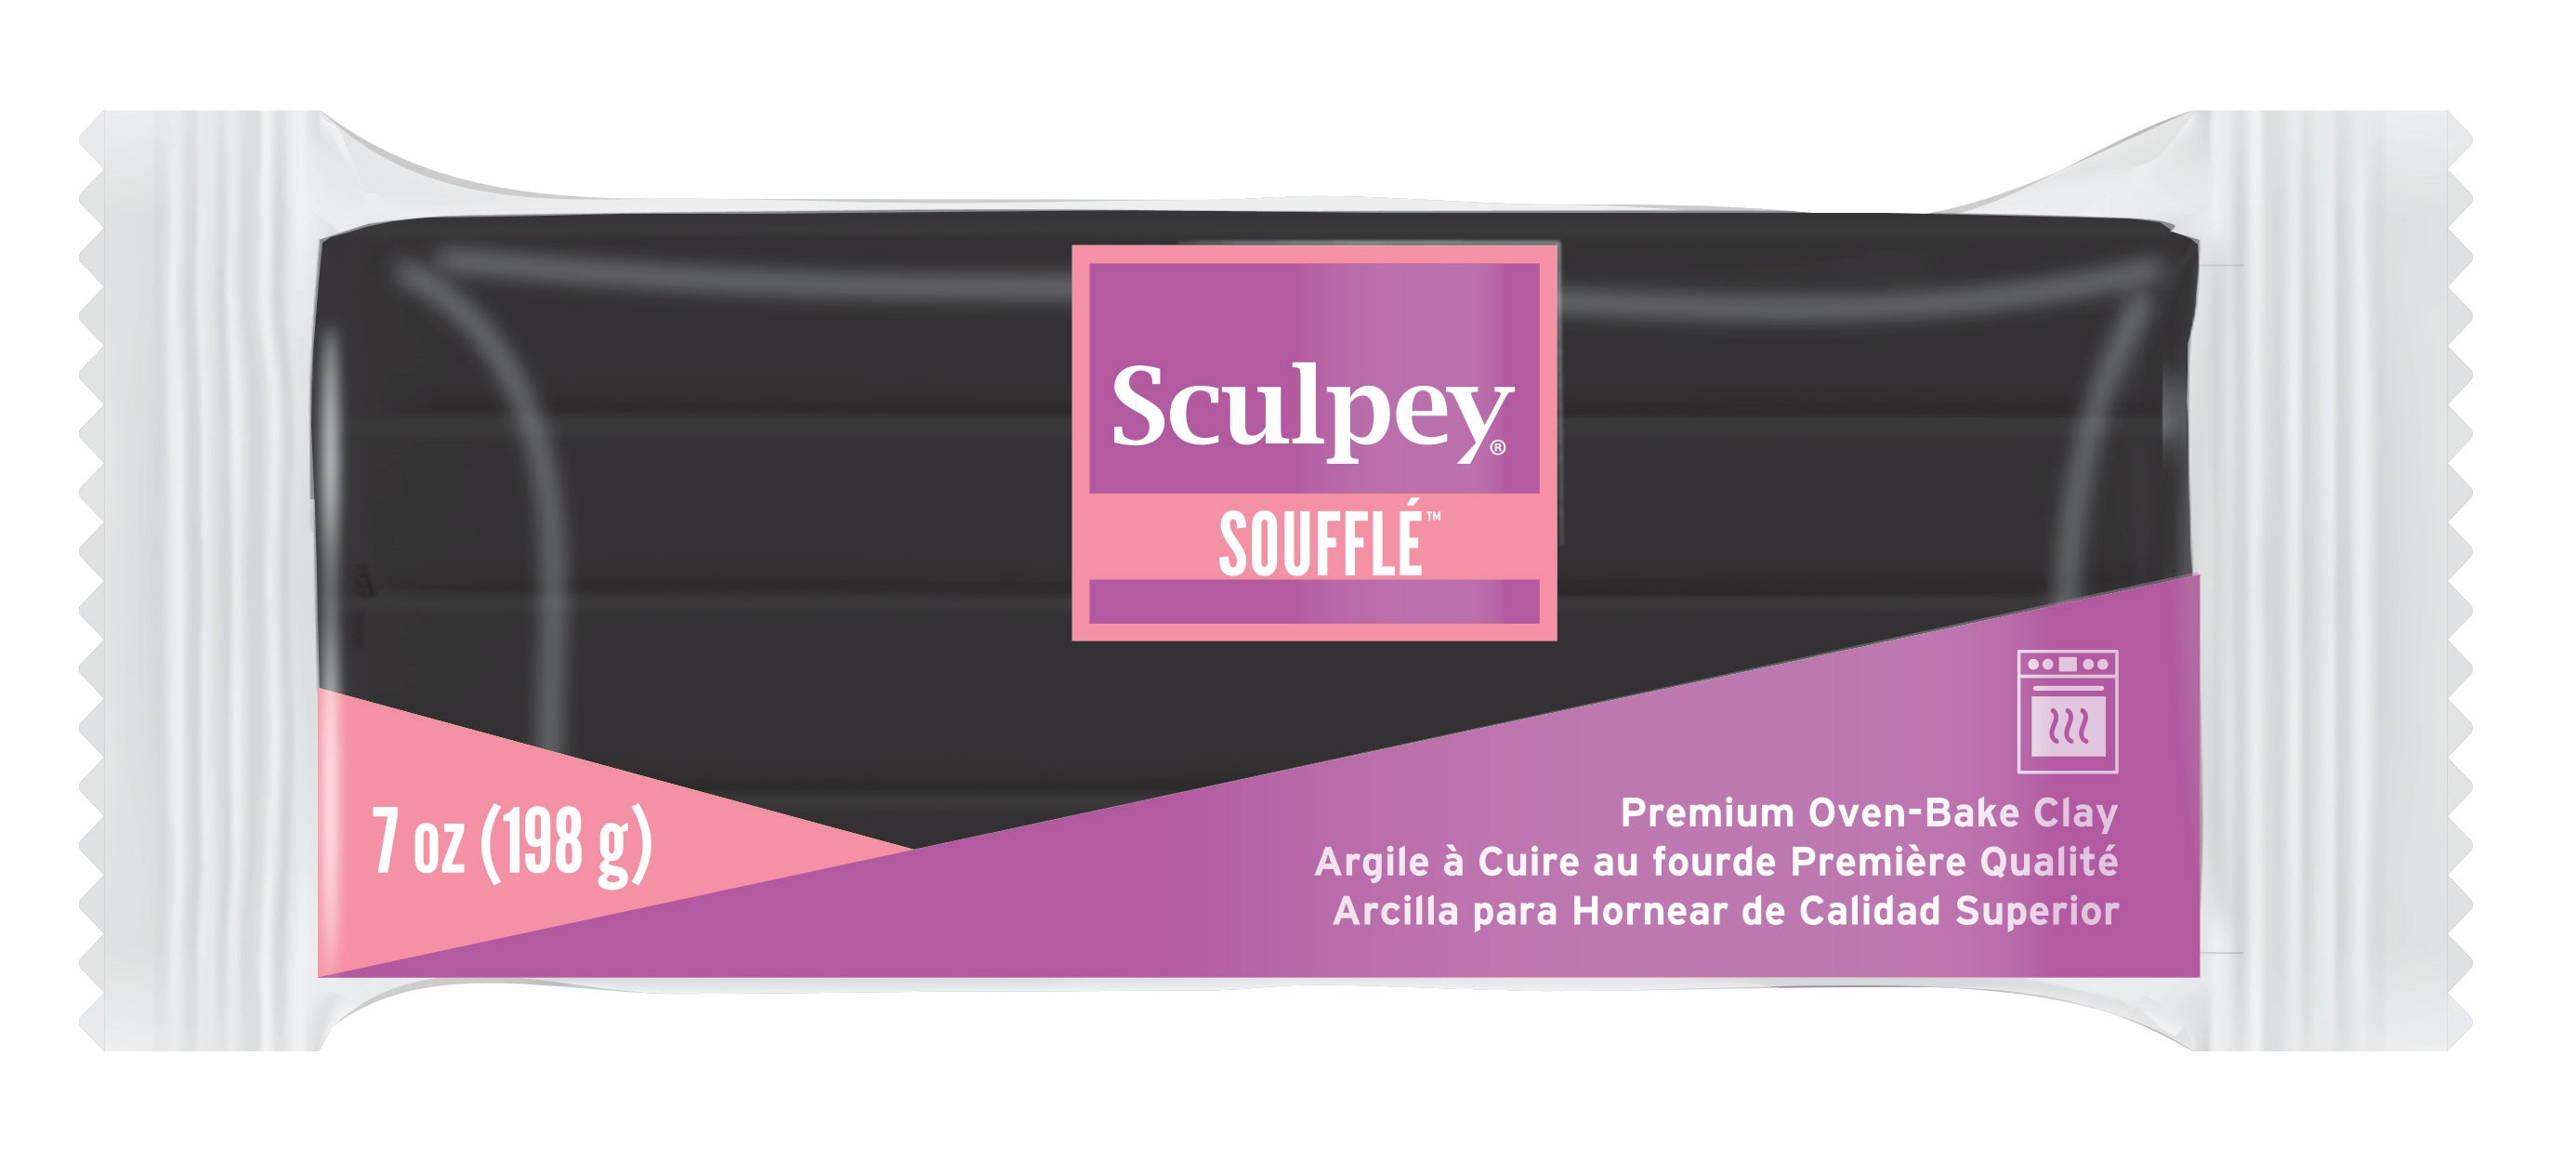 Sculpey Soufflé 48g IGLOO